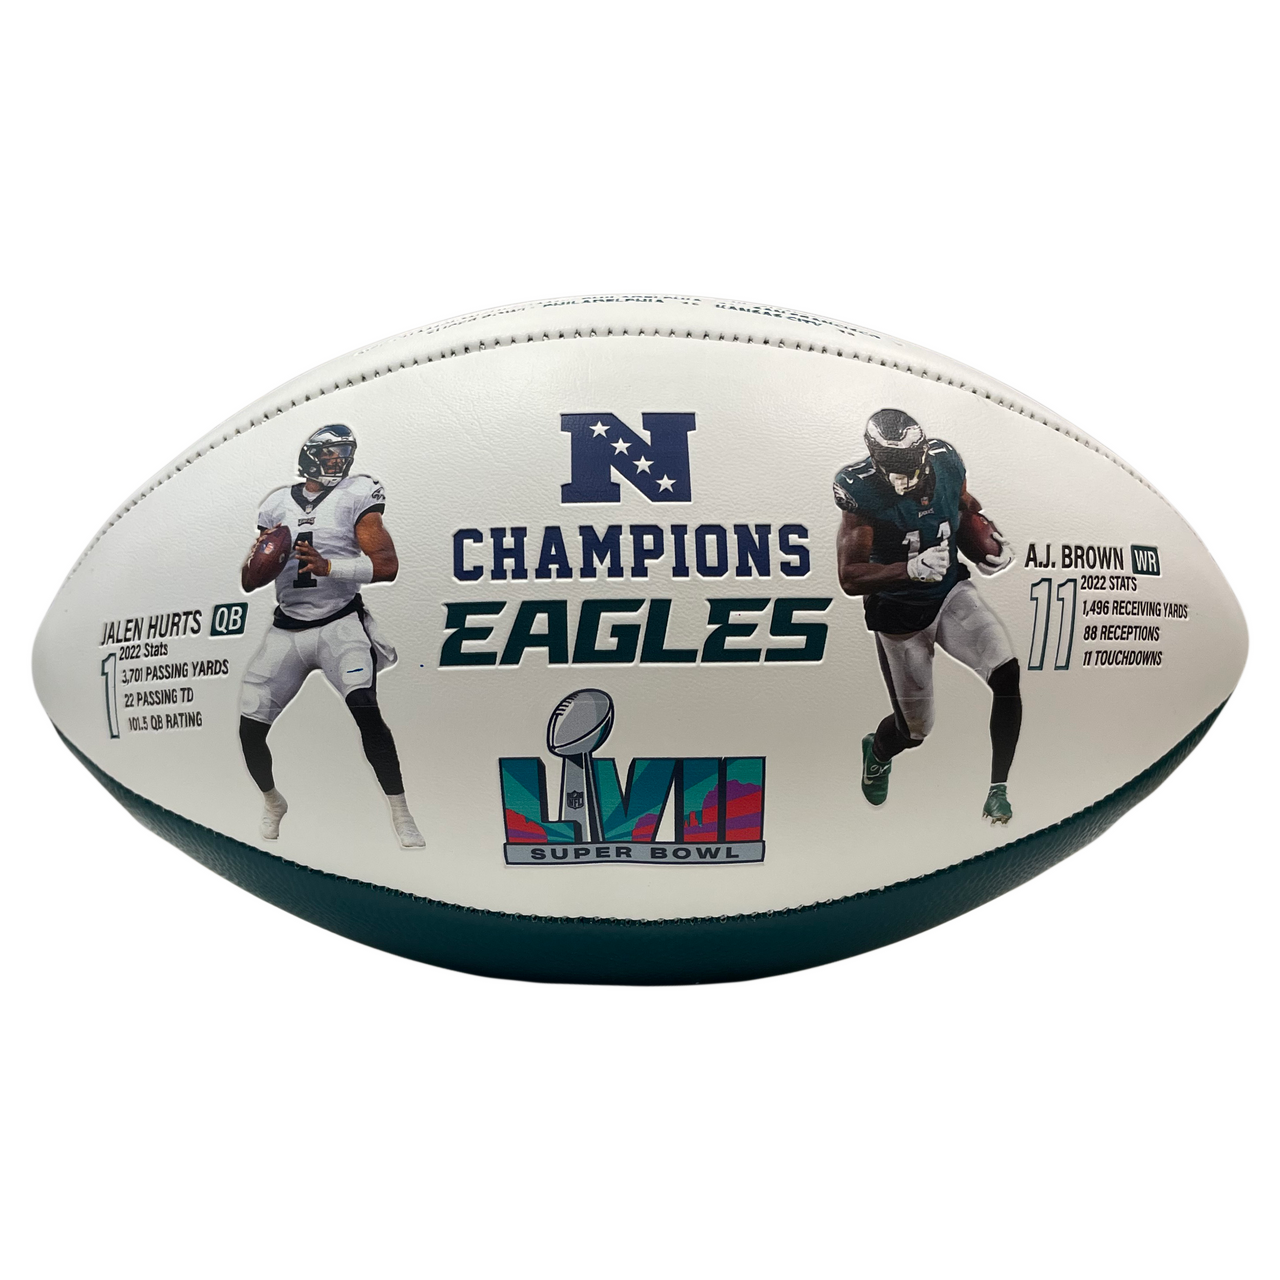 Philadelphia Eagles 2022 NFC Champions plaque - New Lower Pricing!!